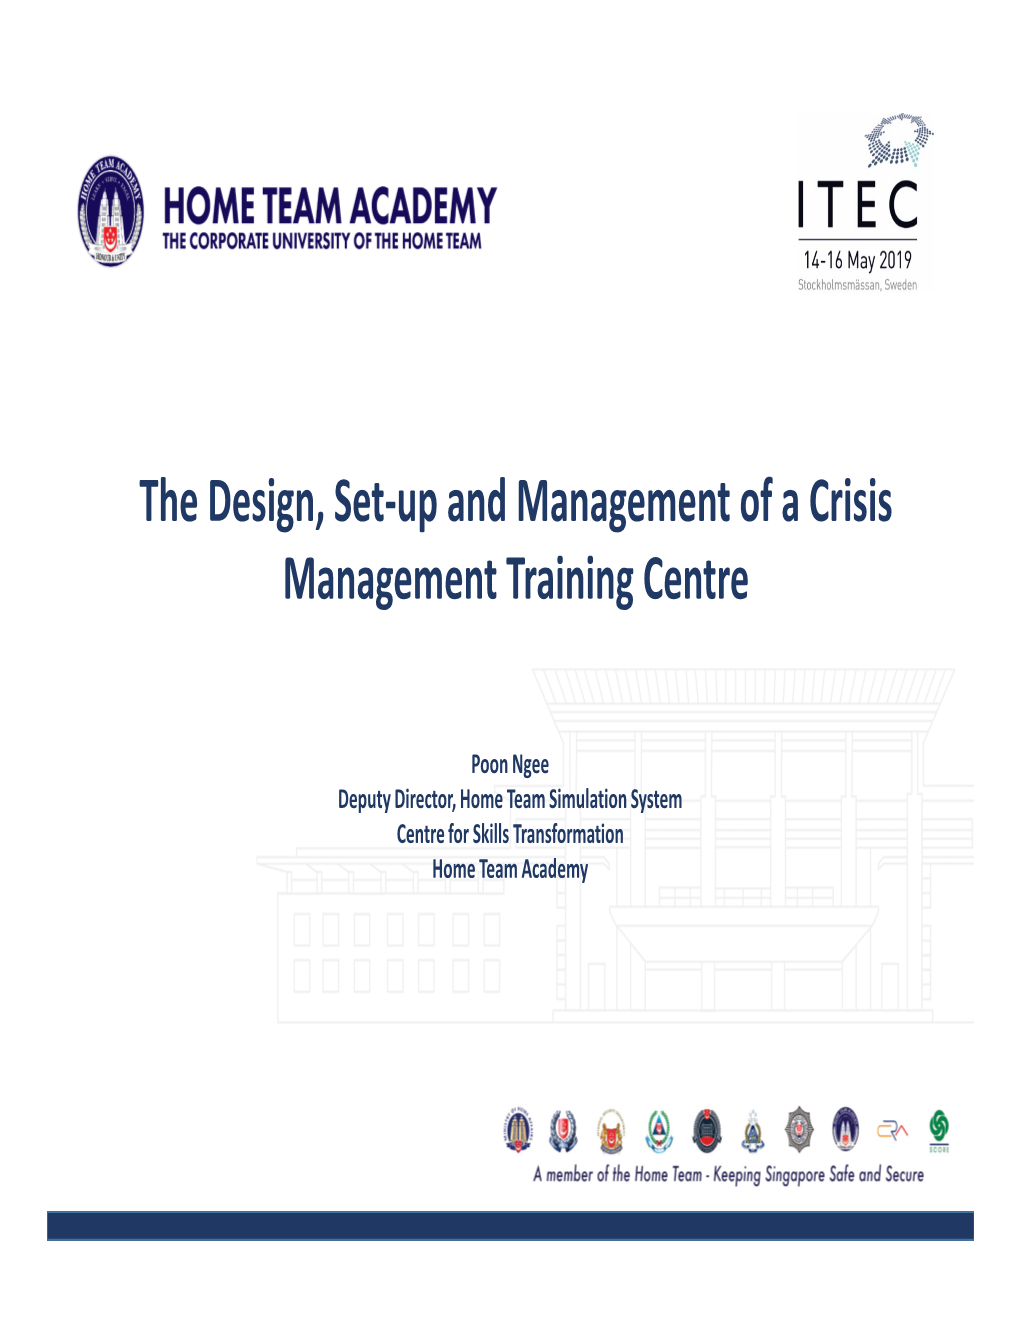 The Design, Set-Up and Management of a Crisis Management Training Centre